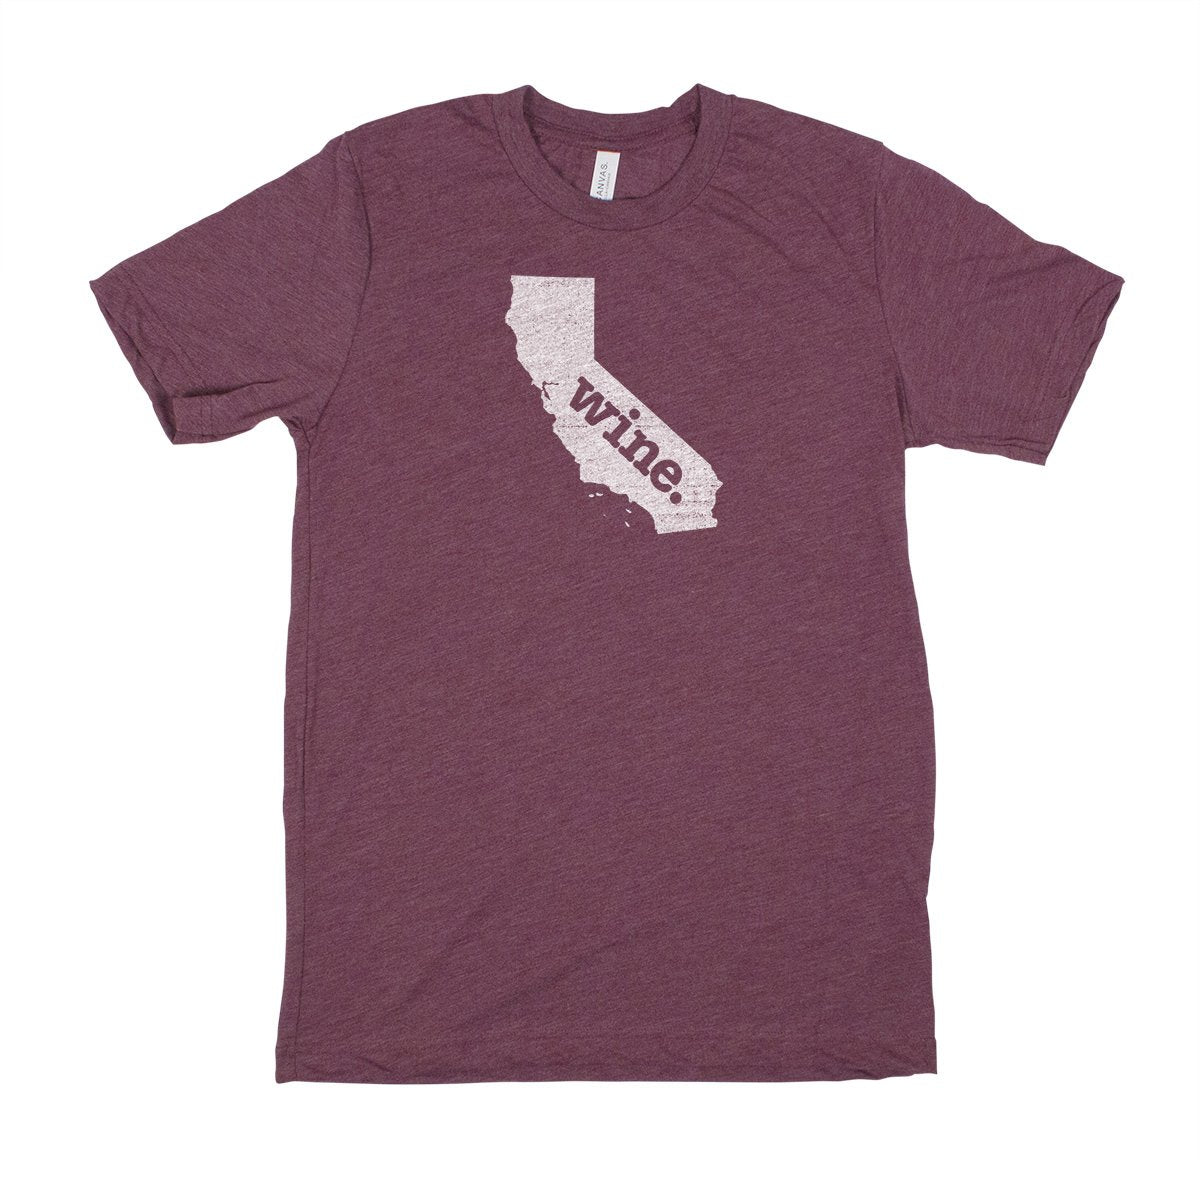 run. Men's Unisex T-Shirt - New York